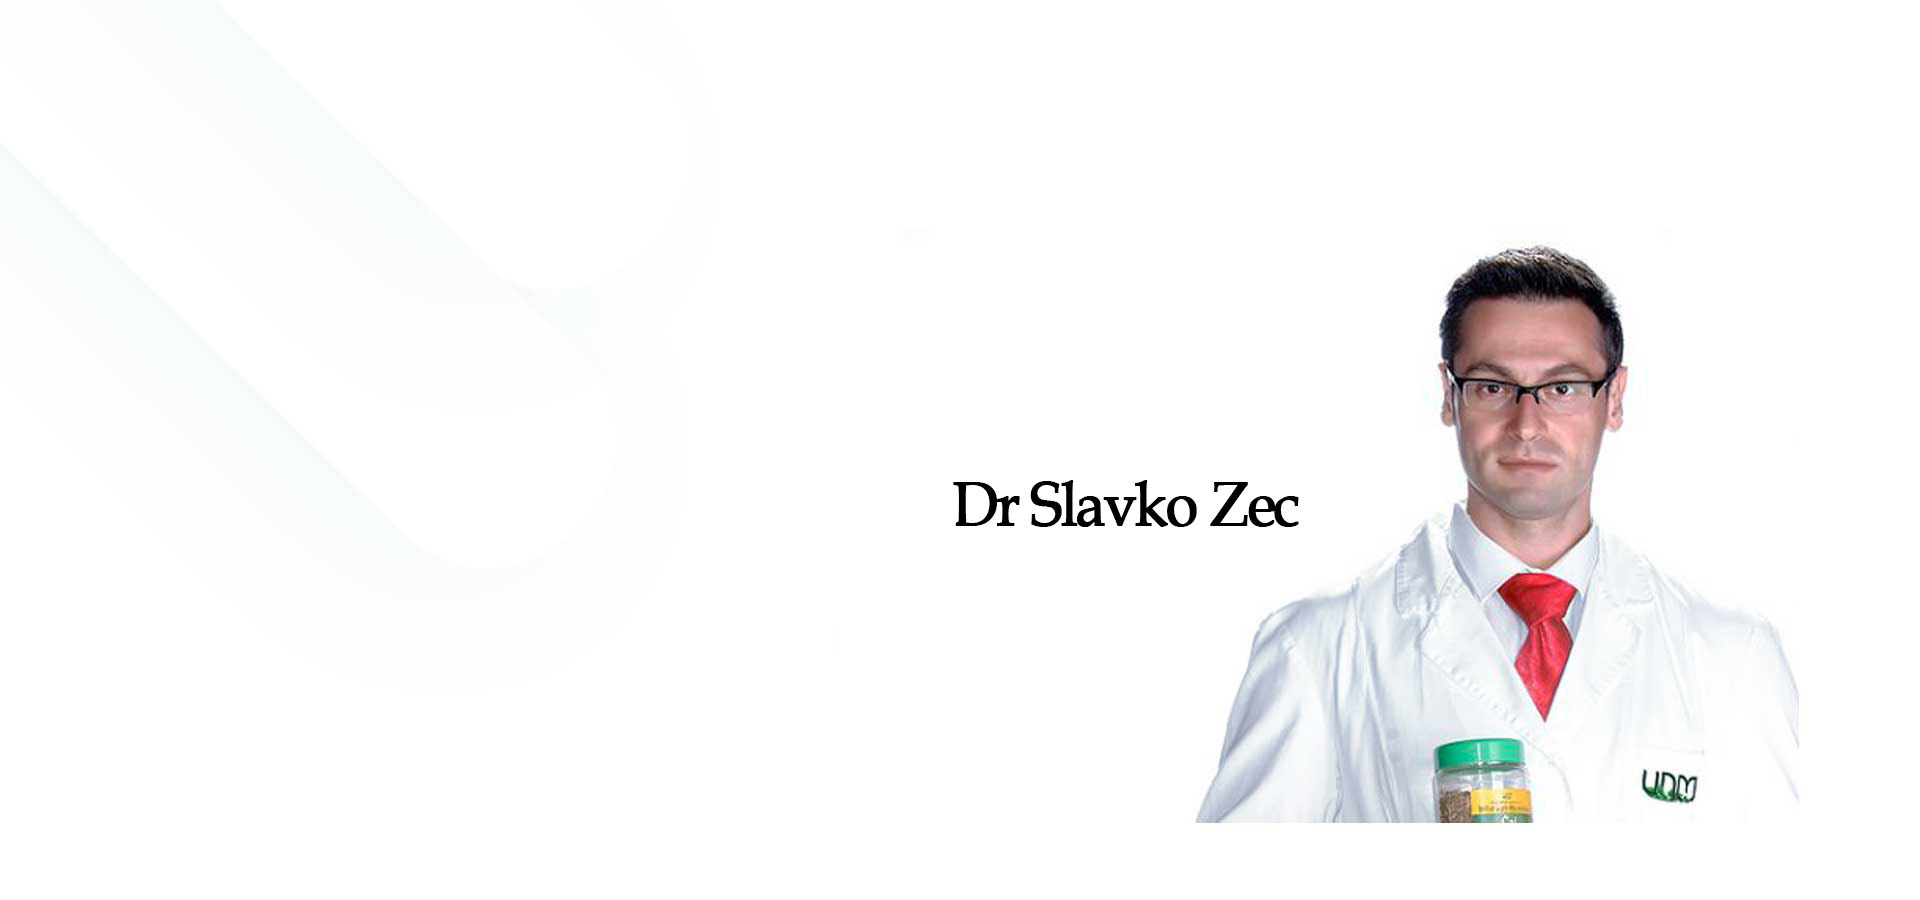 Dr Slavko Zec